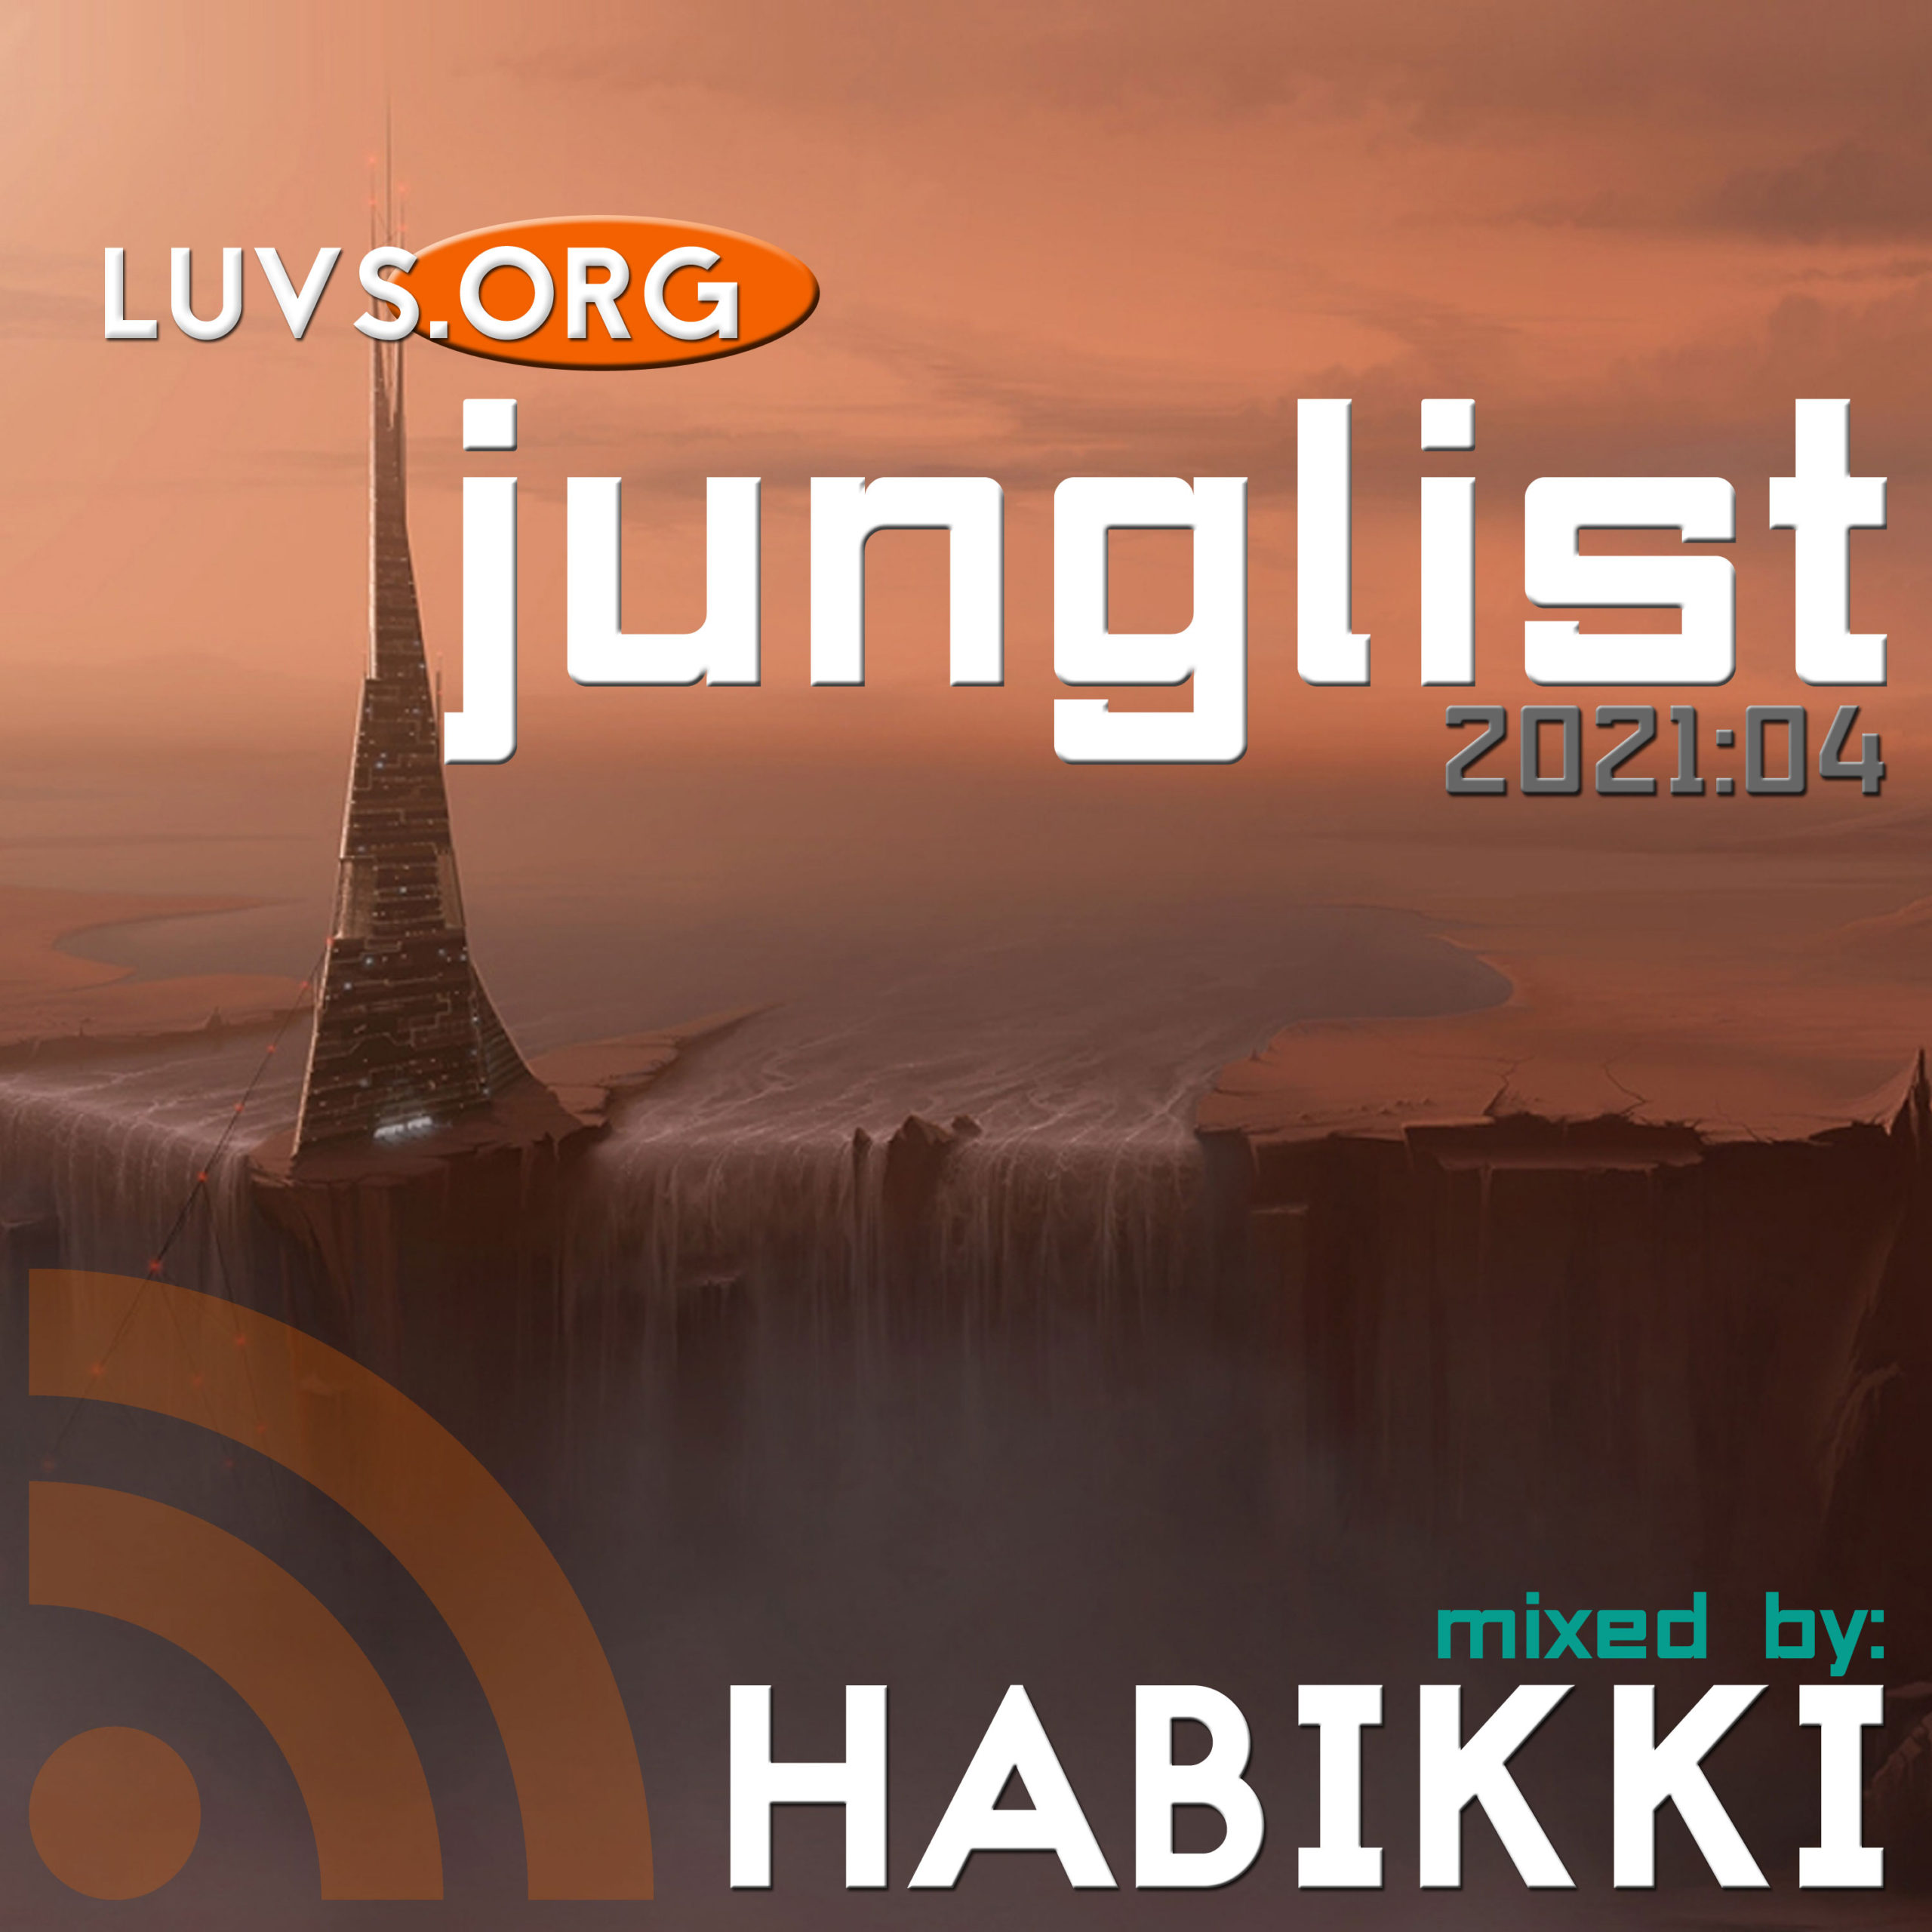 Luvs.org Sessions: [2021:04] Junglist